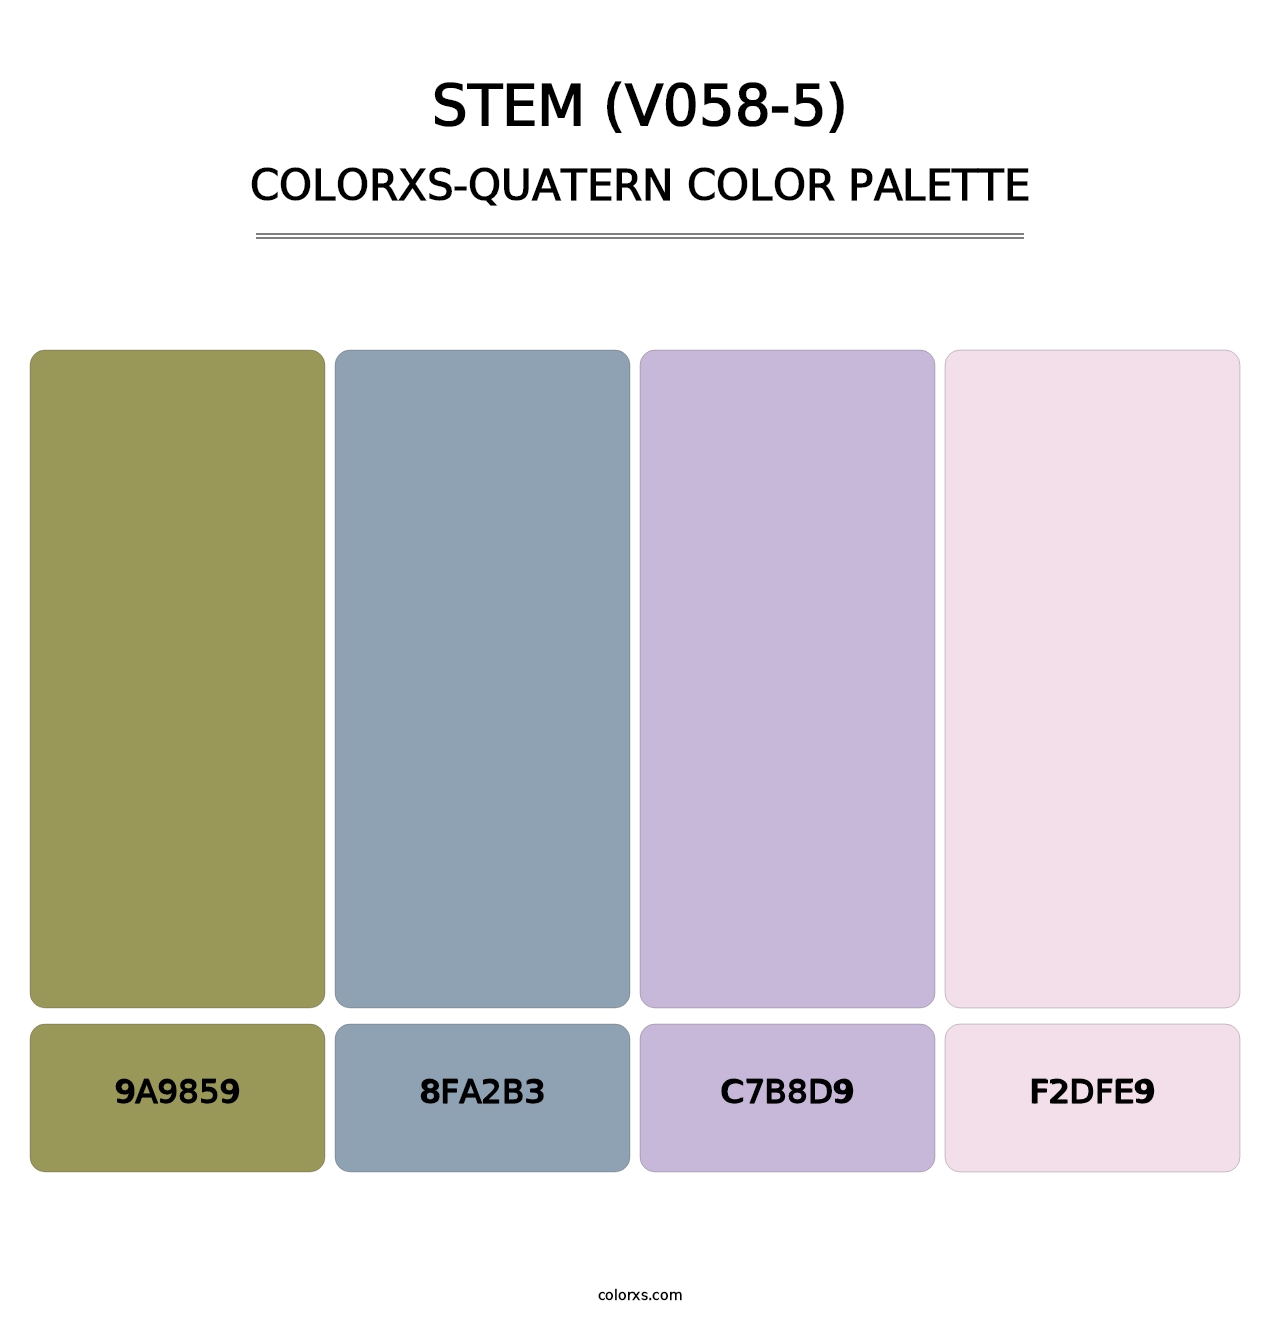 Stem (V058-5) - Colorxs Quatern Palette